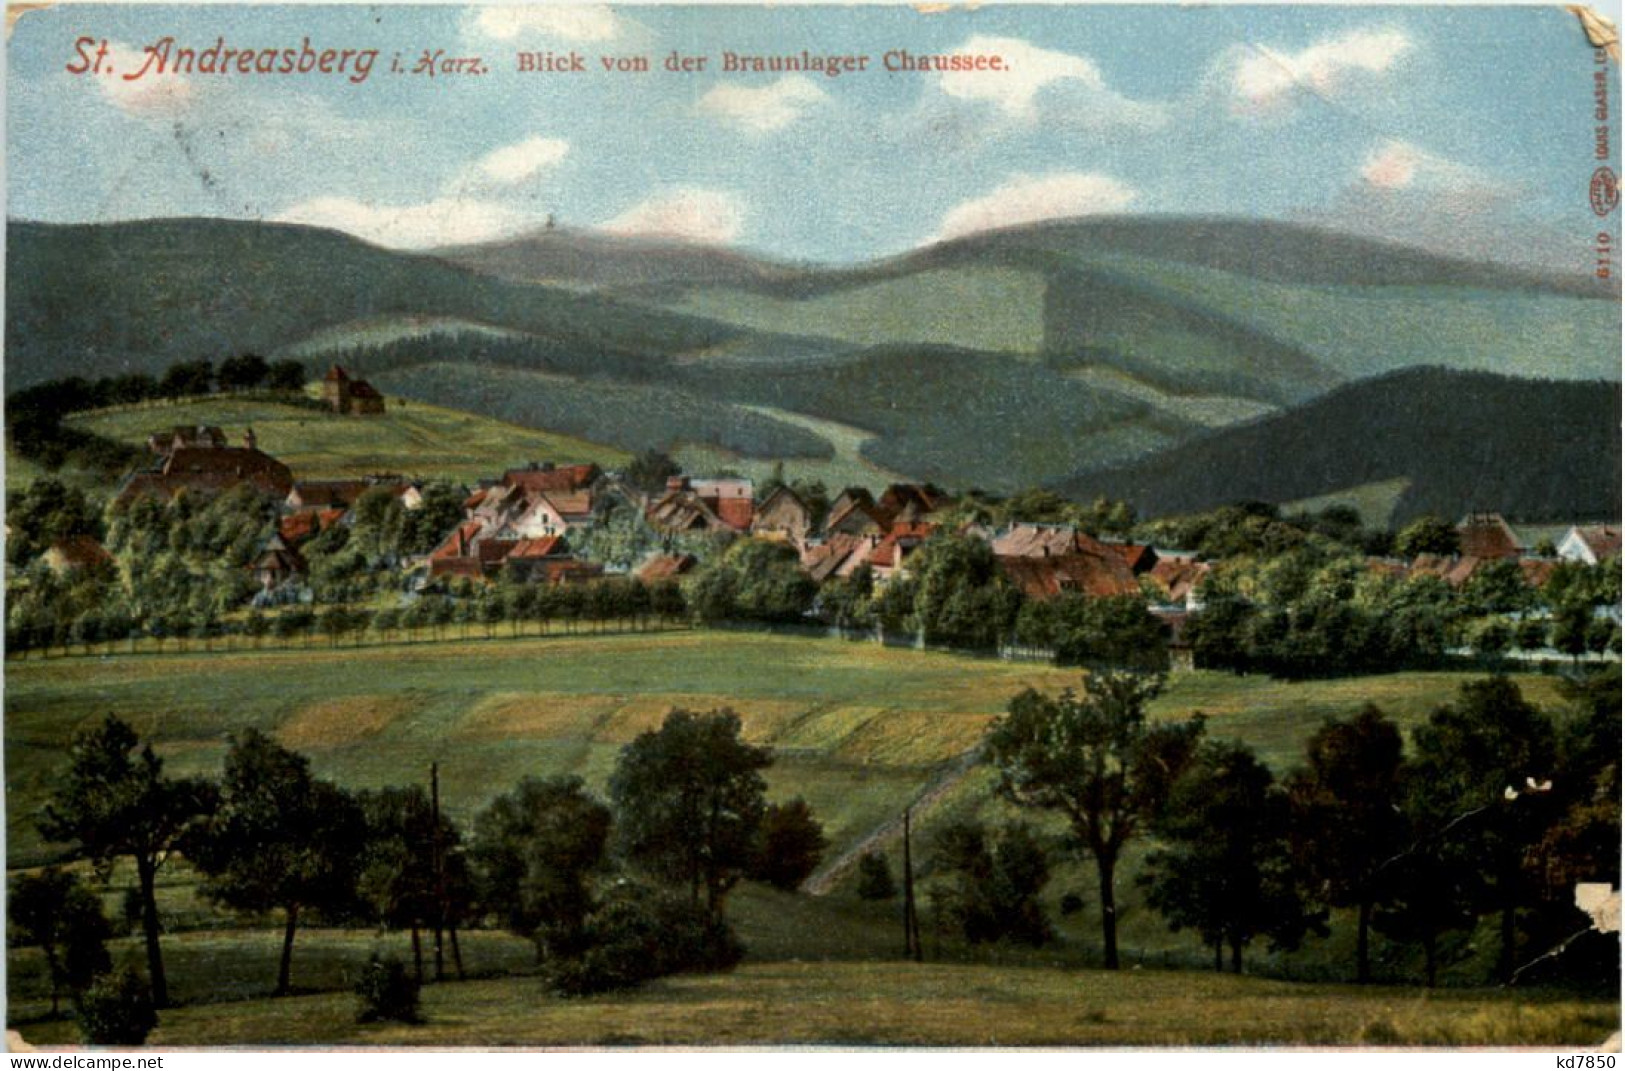 St. Andreasberg - Braunlage